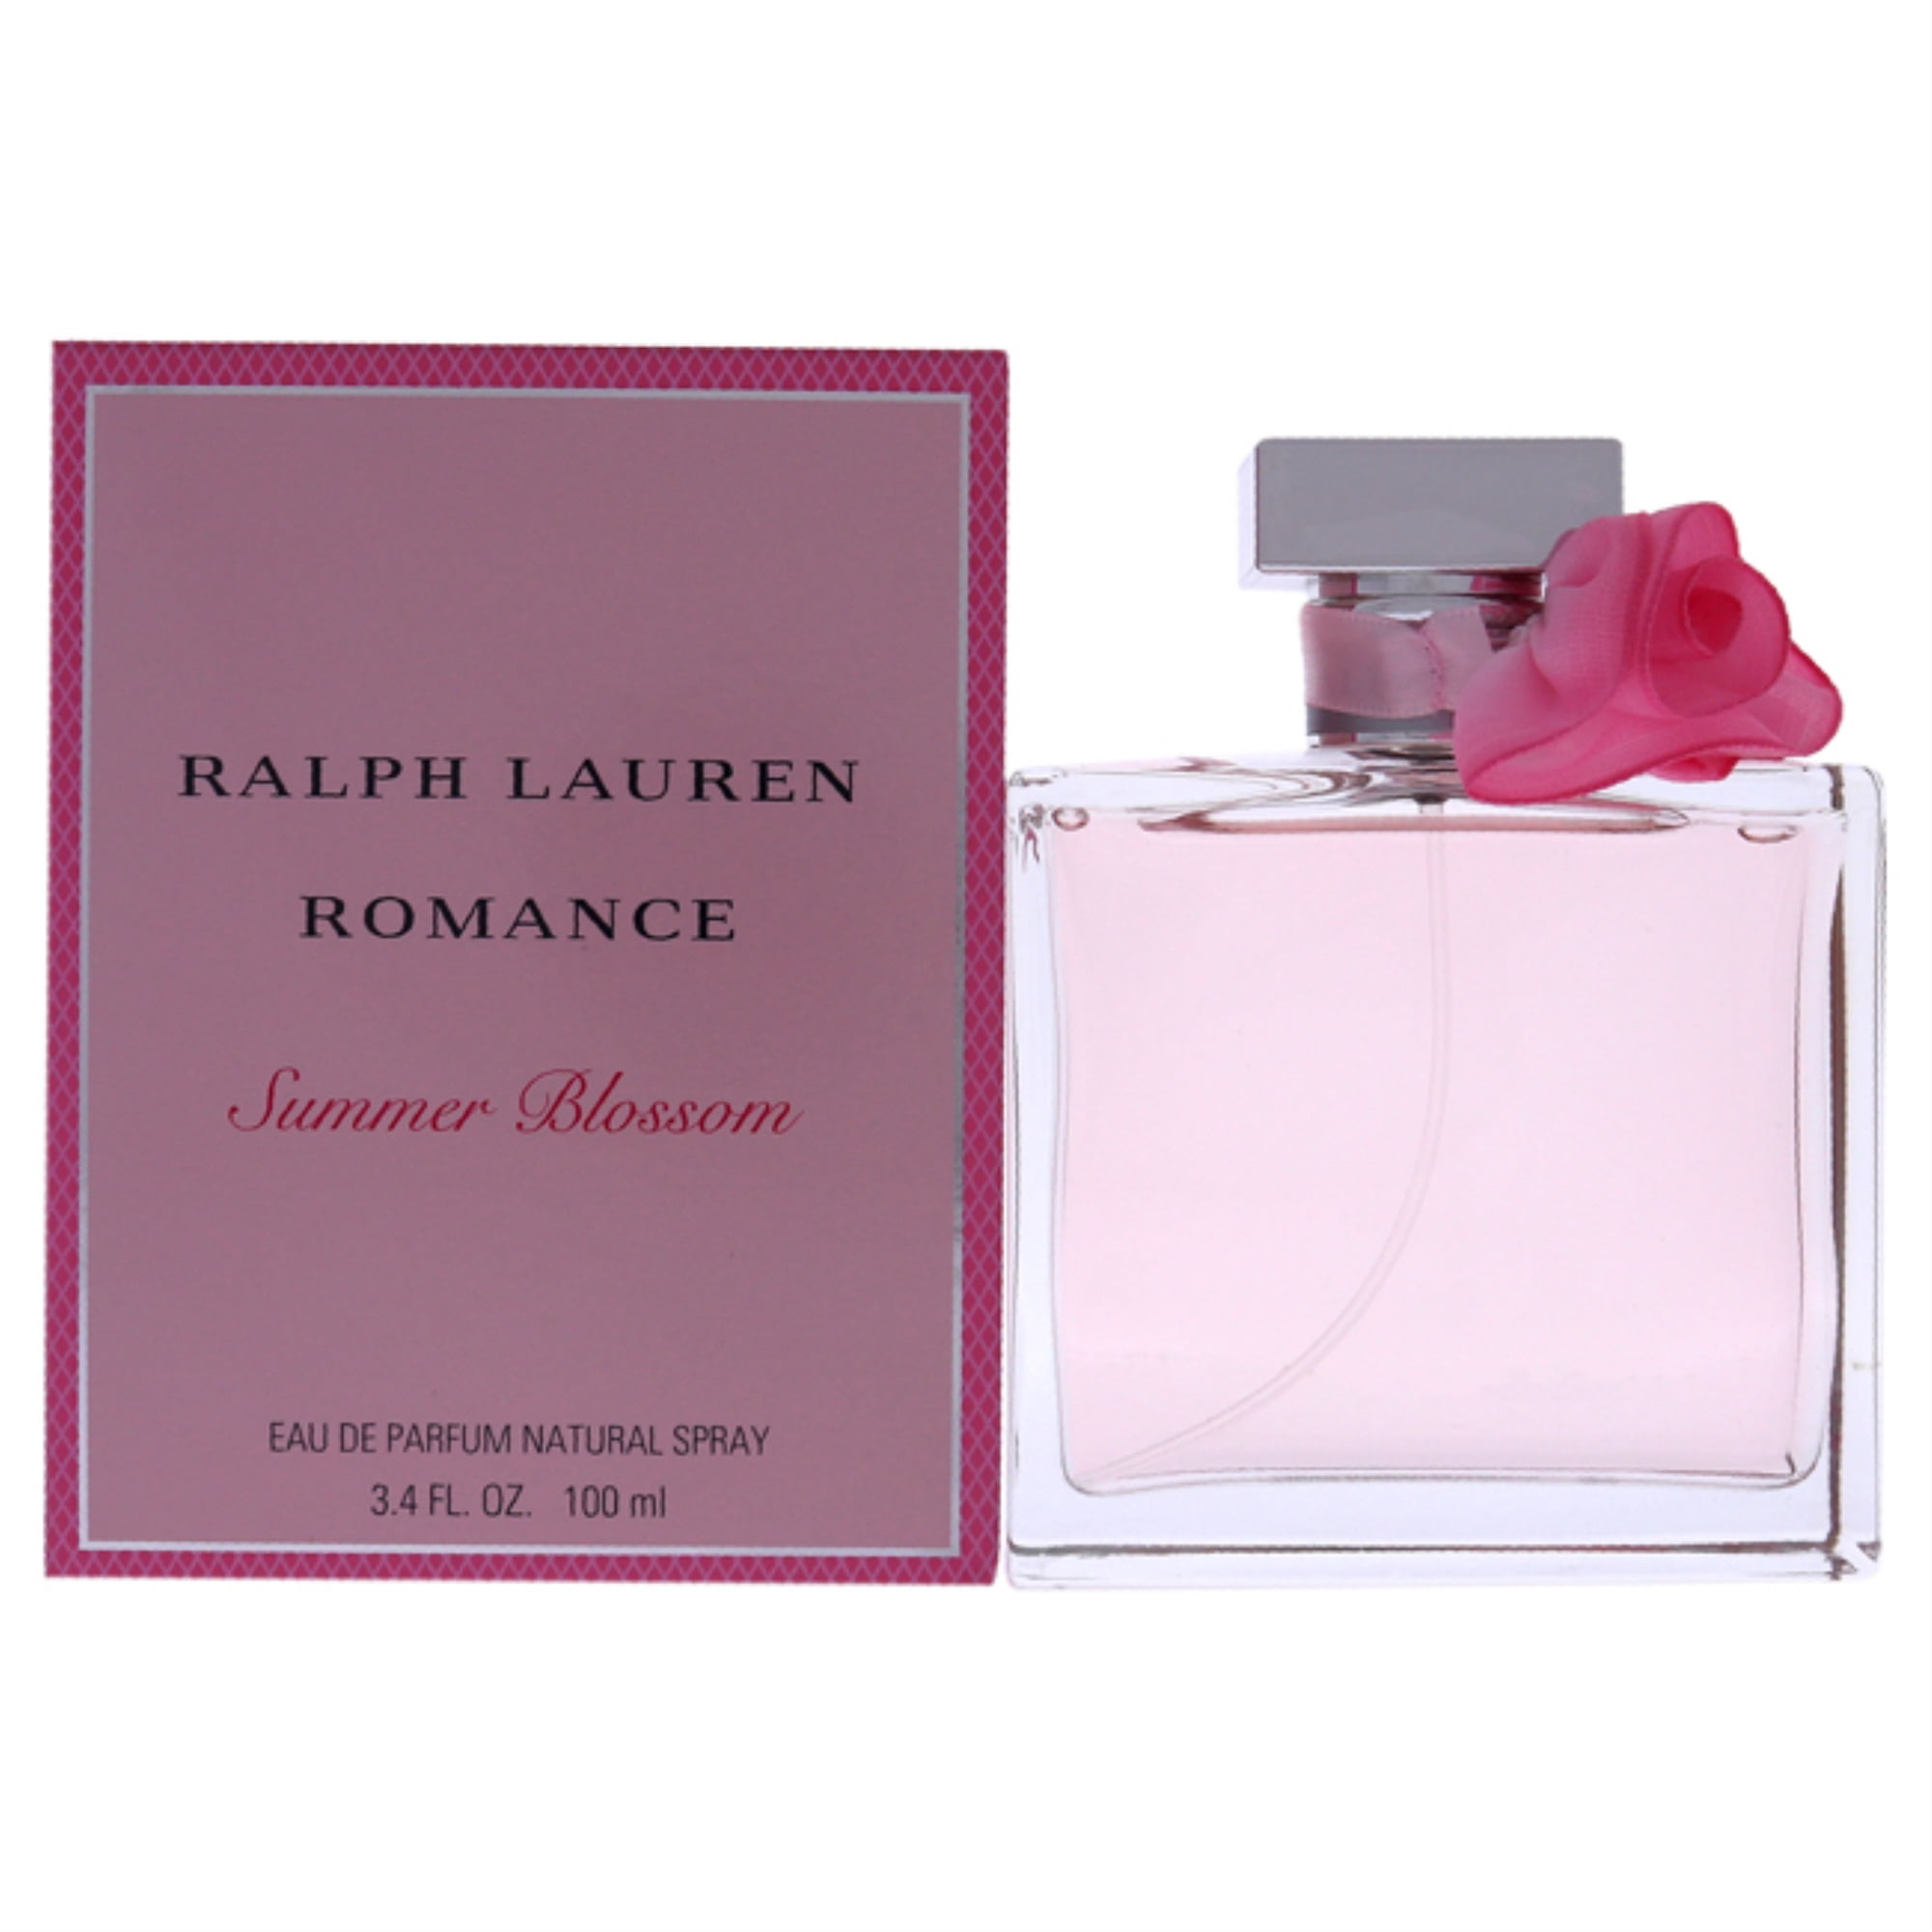 ROMANCE SUMMER BLOSSOM * Ralph Lauren 3.4 oz / 100 ml EDP Women Perfume  Spray